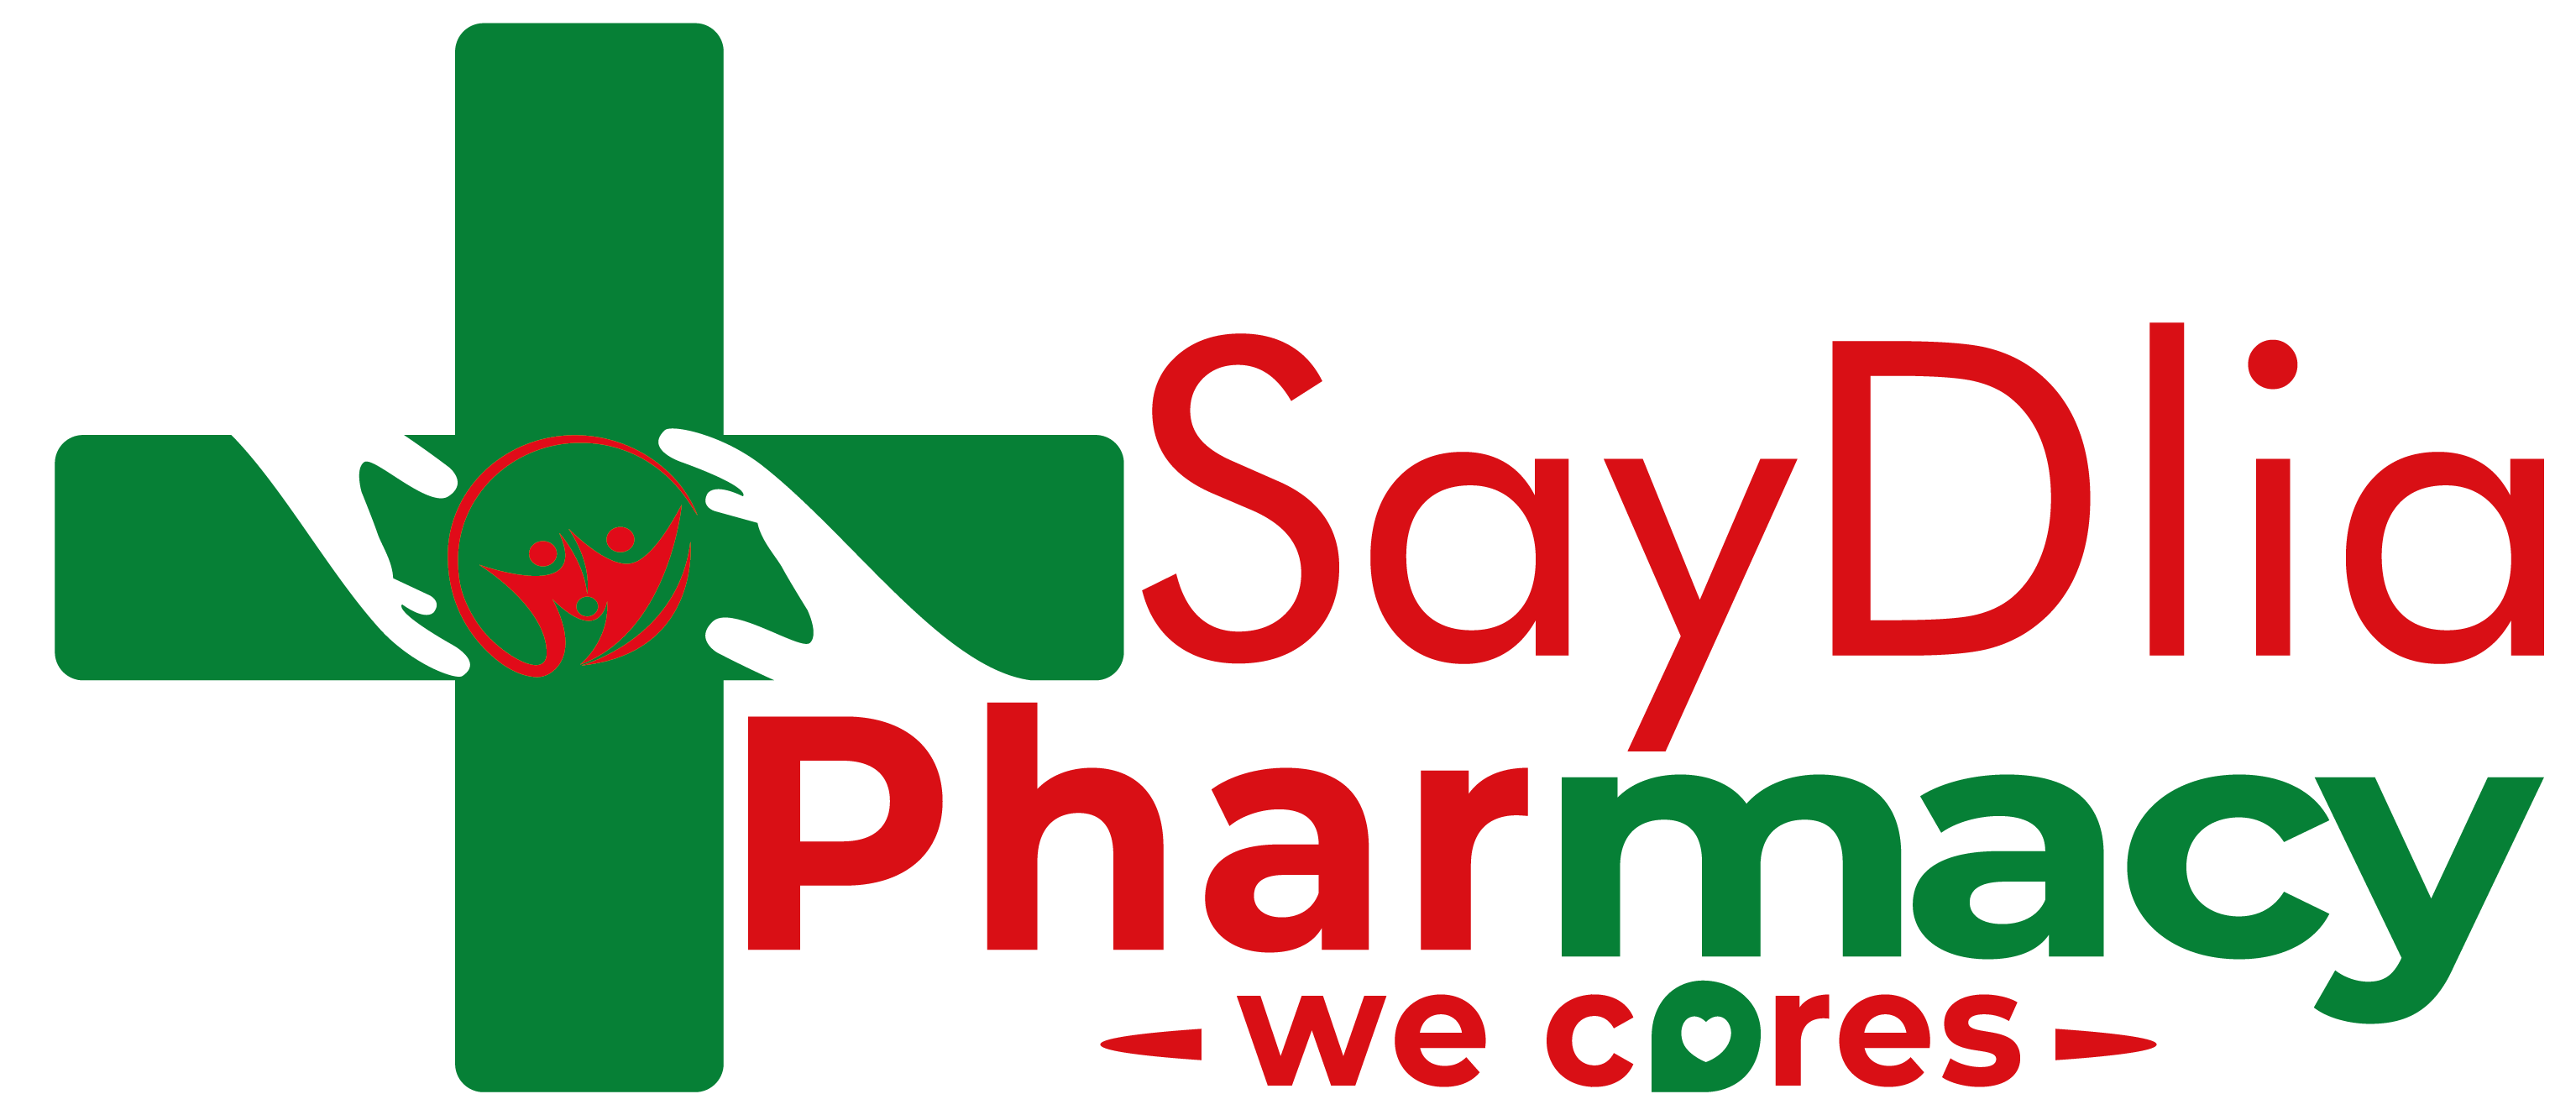 Saydlia Pharmacy